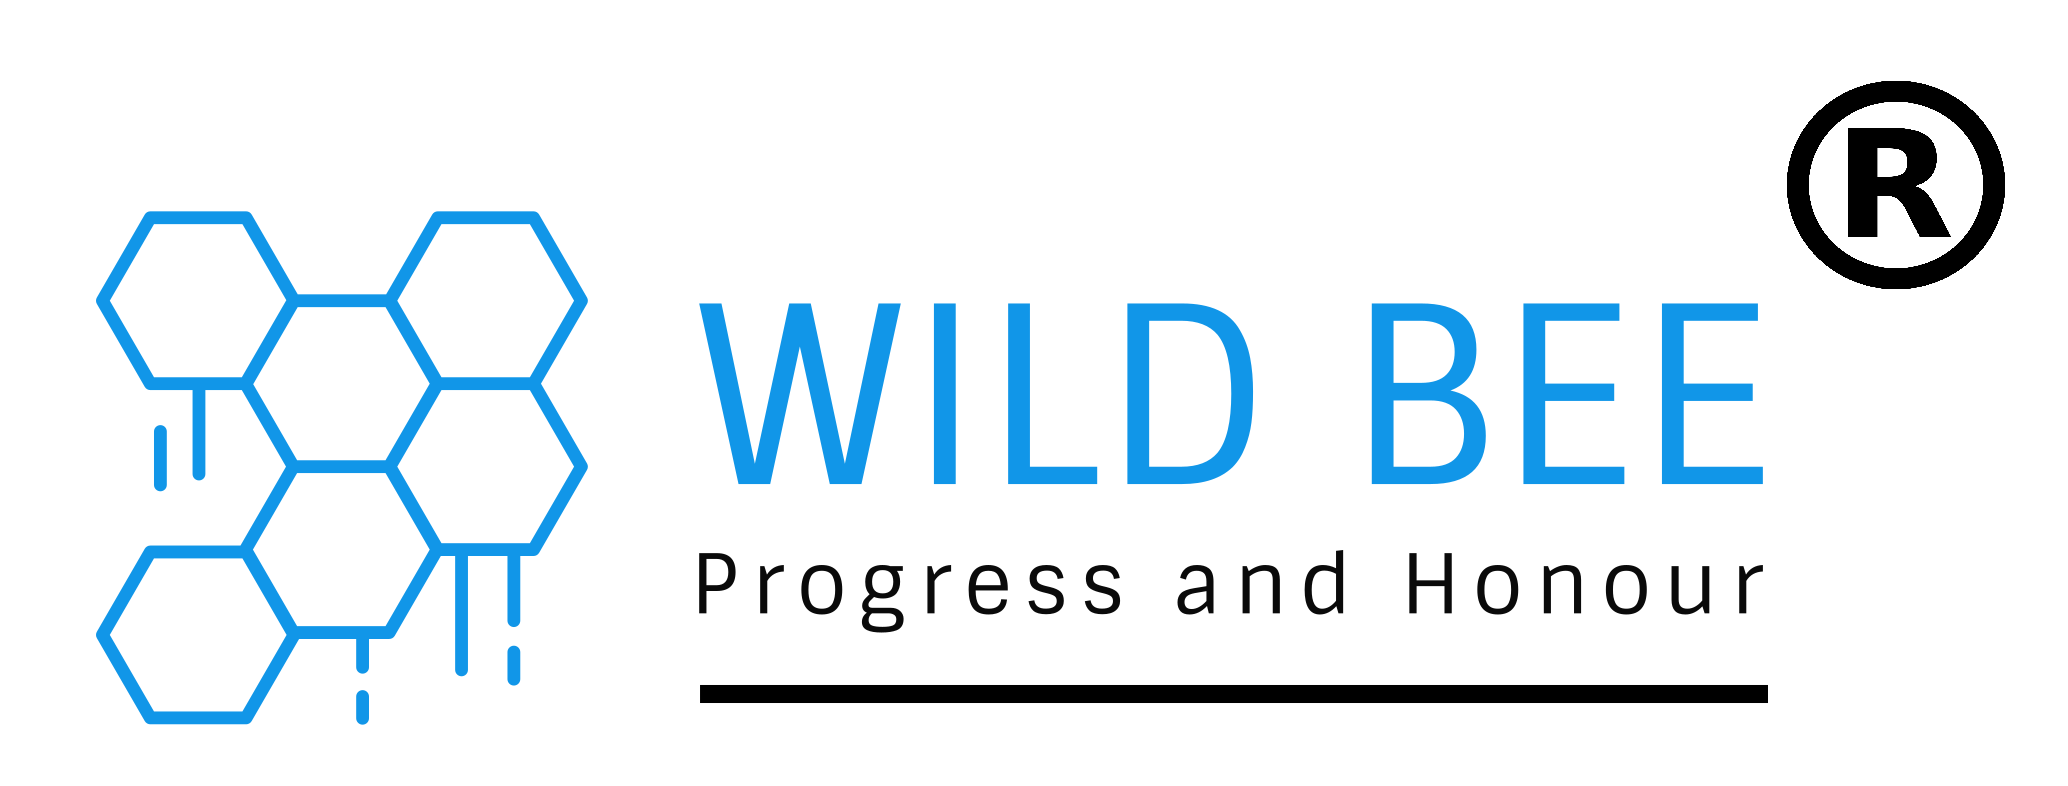 Wild Bee - Progress and Honour